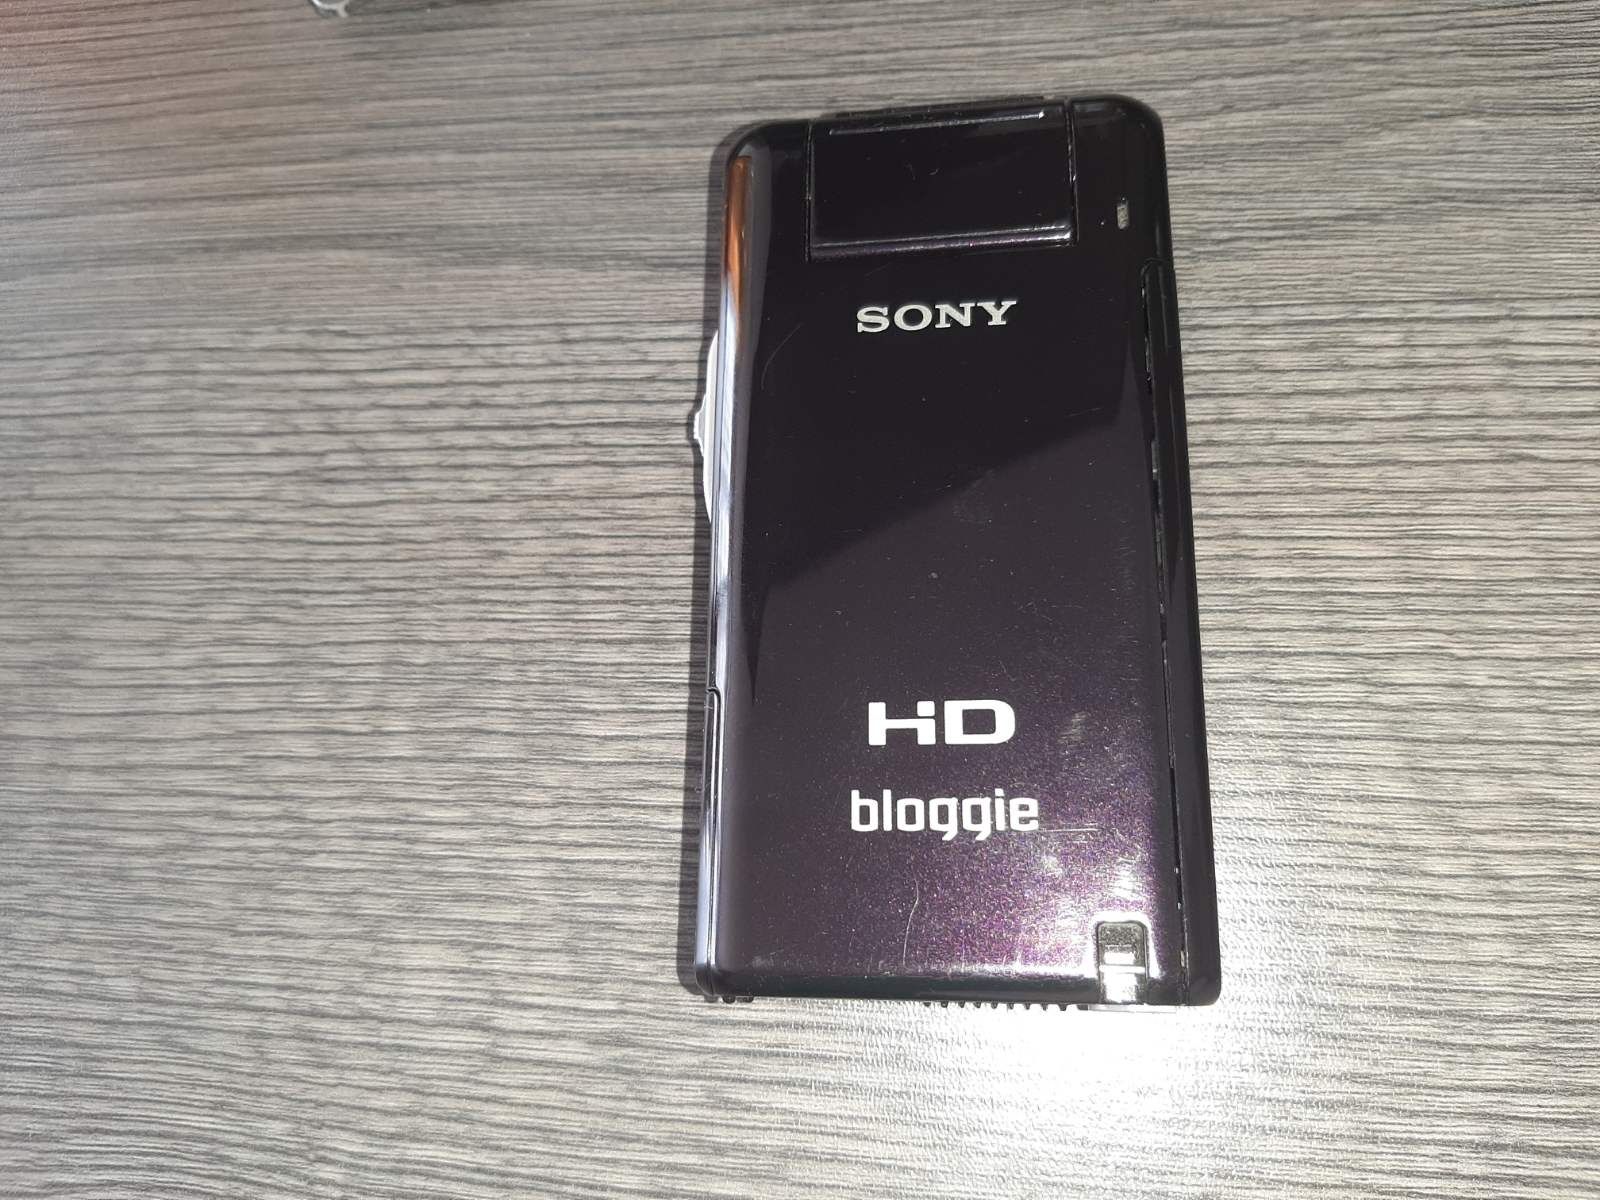 Sony Bloggie HD Мини фотоапарат